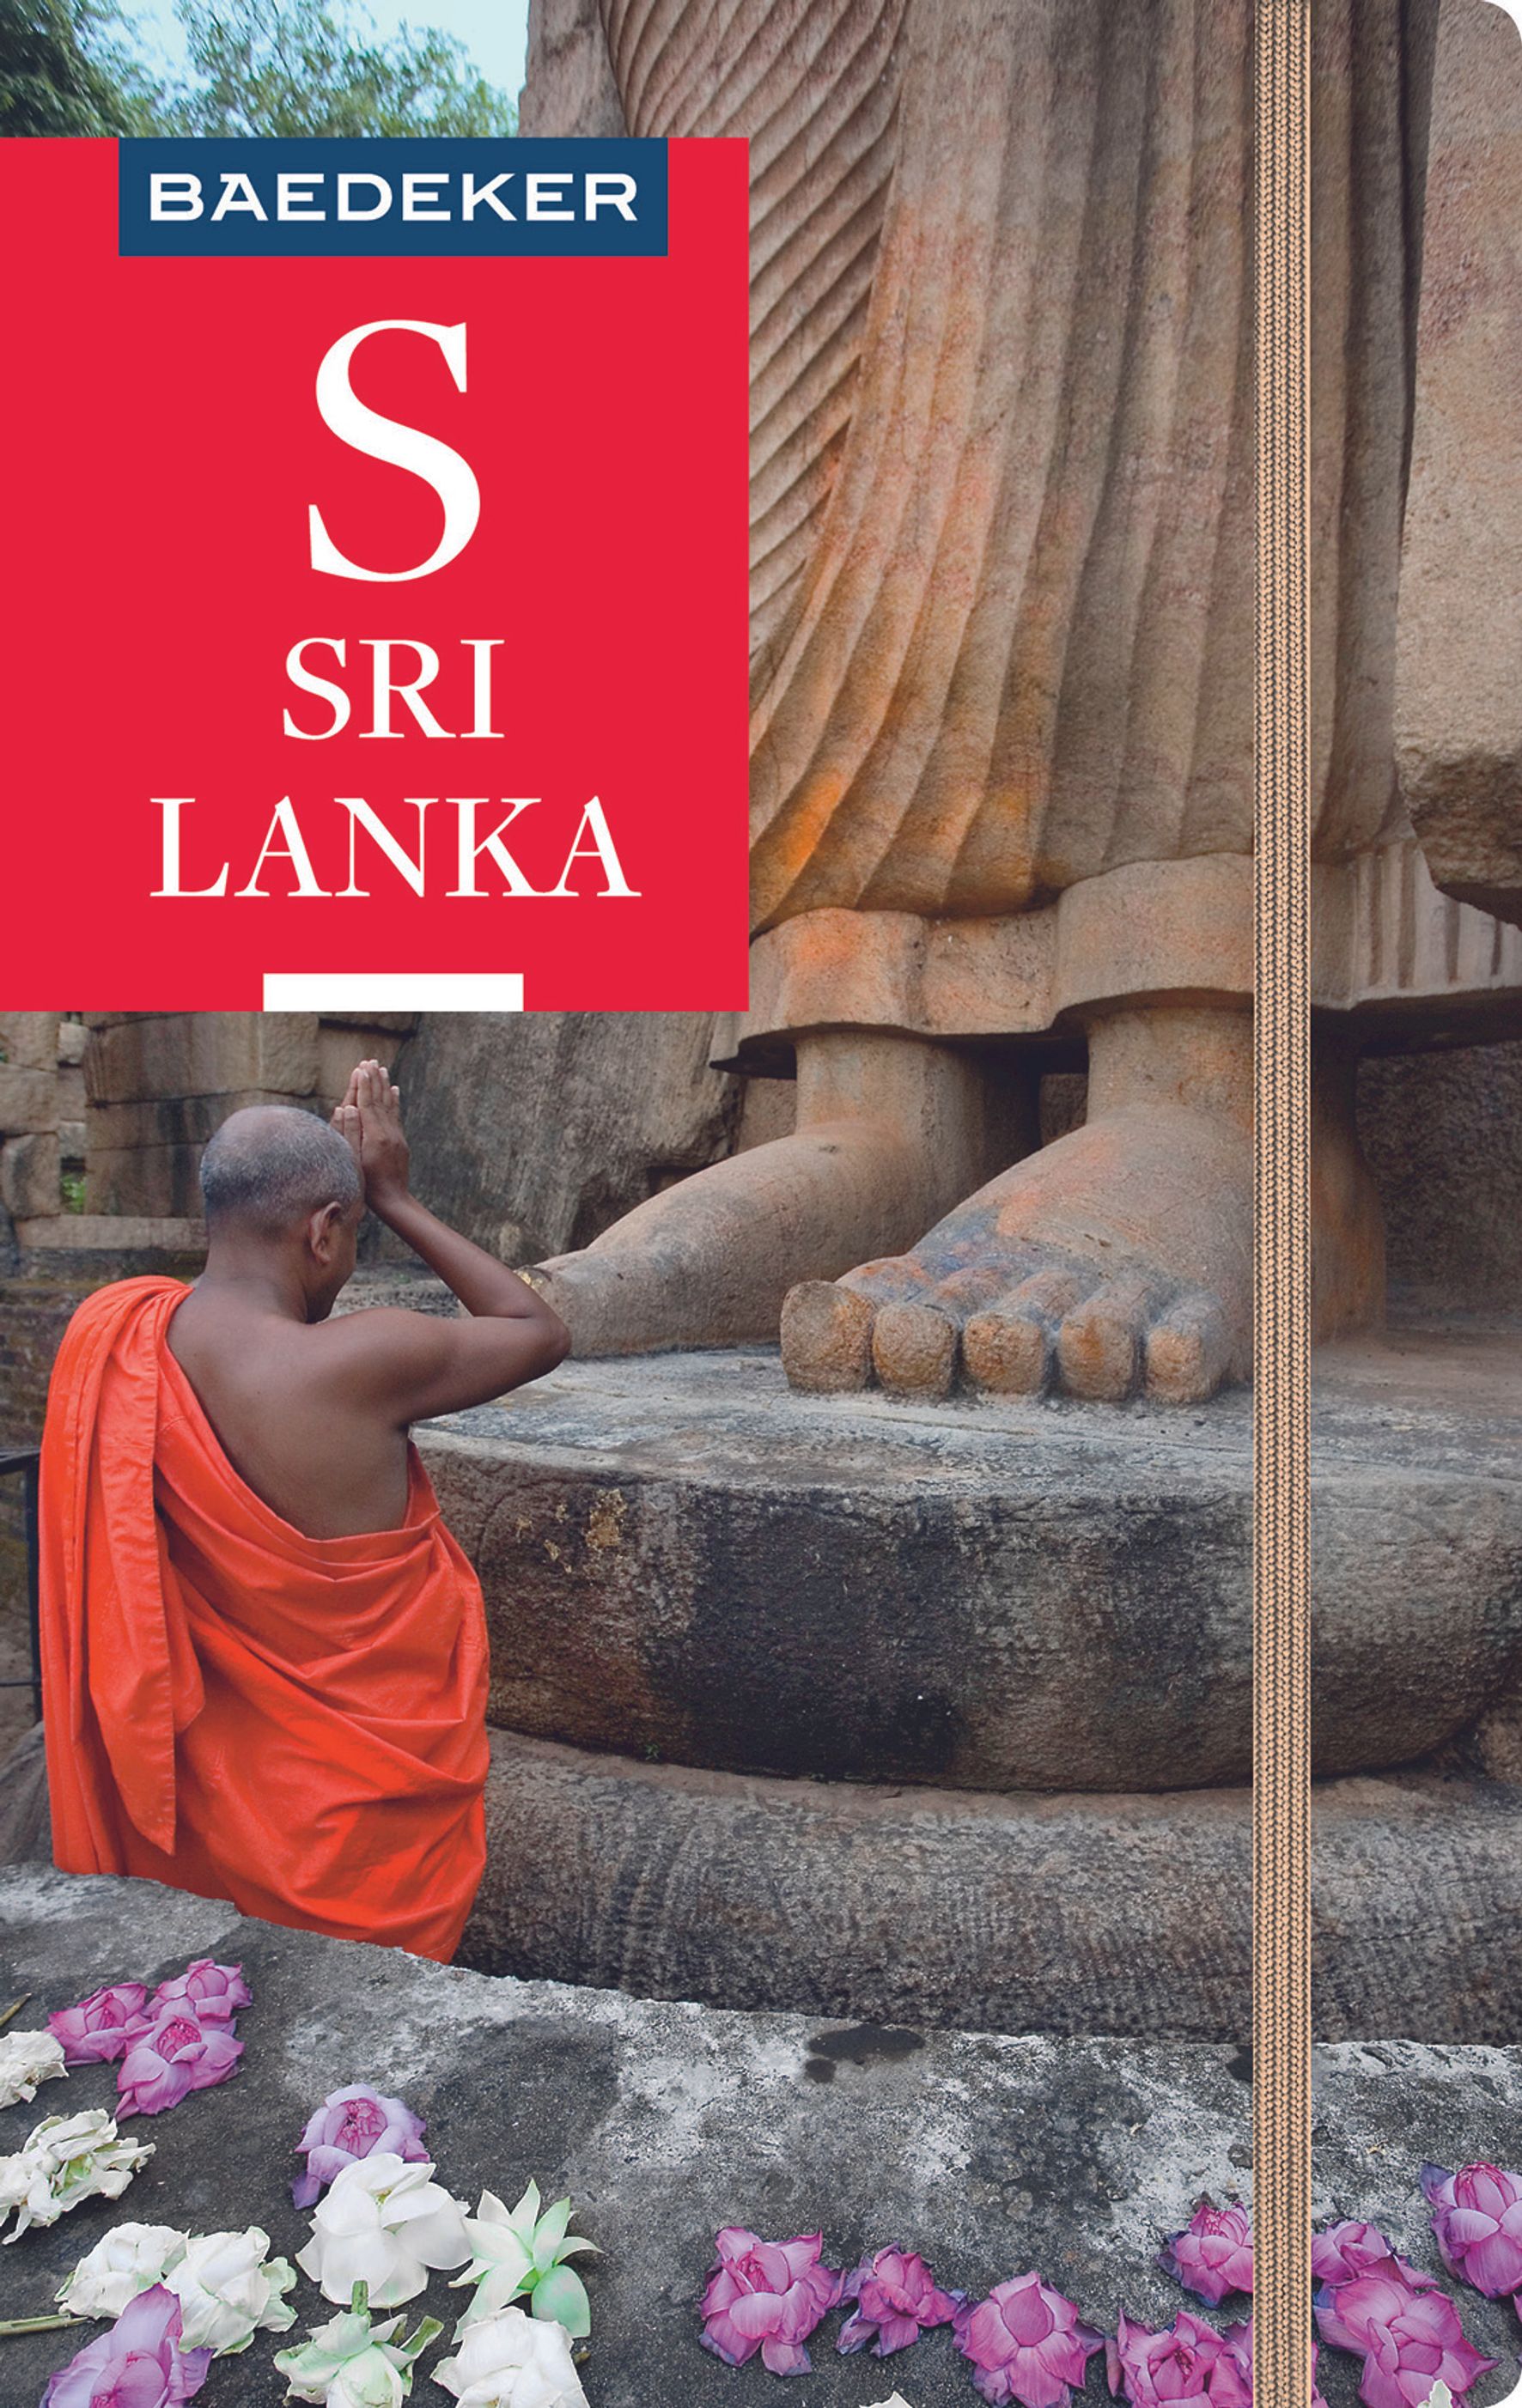 Baedeker Sri Lanka (eBook)